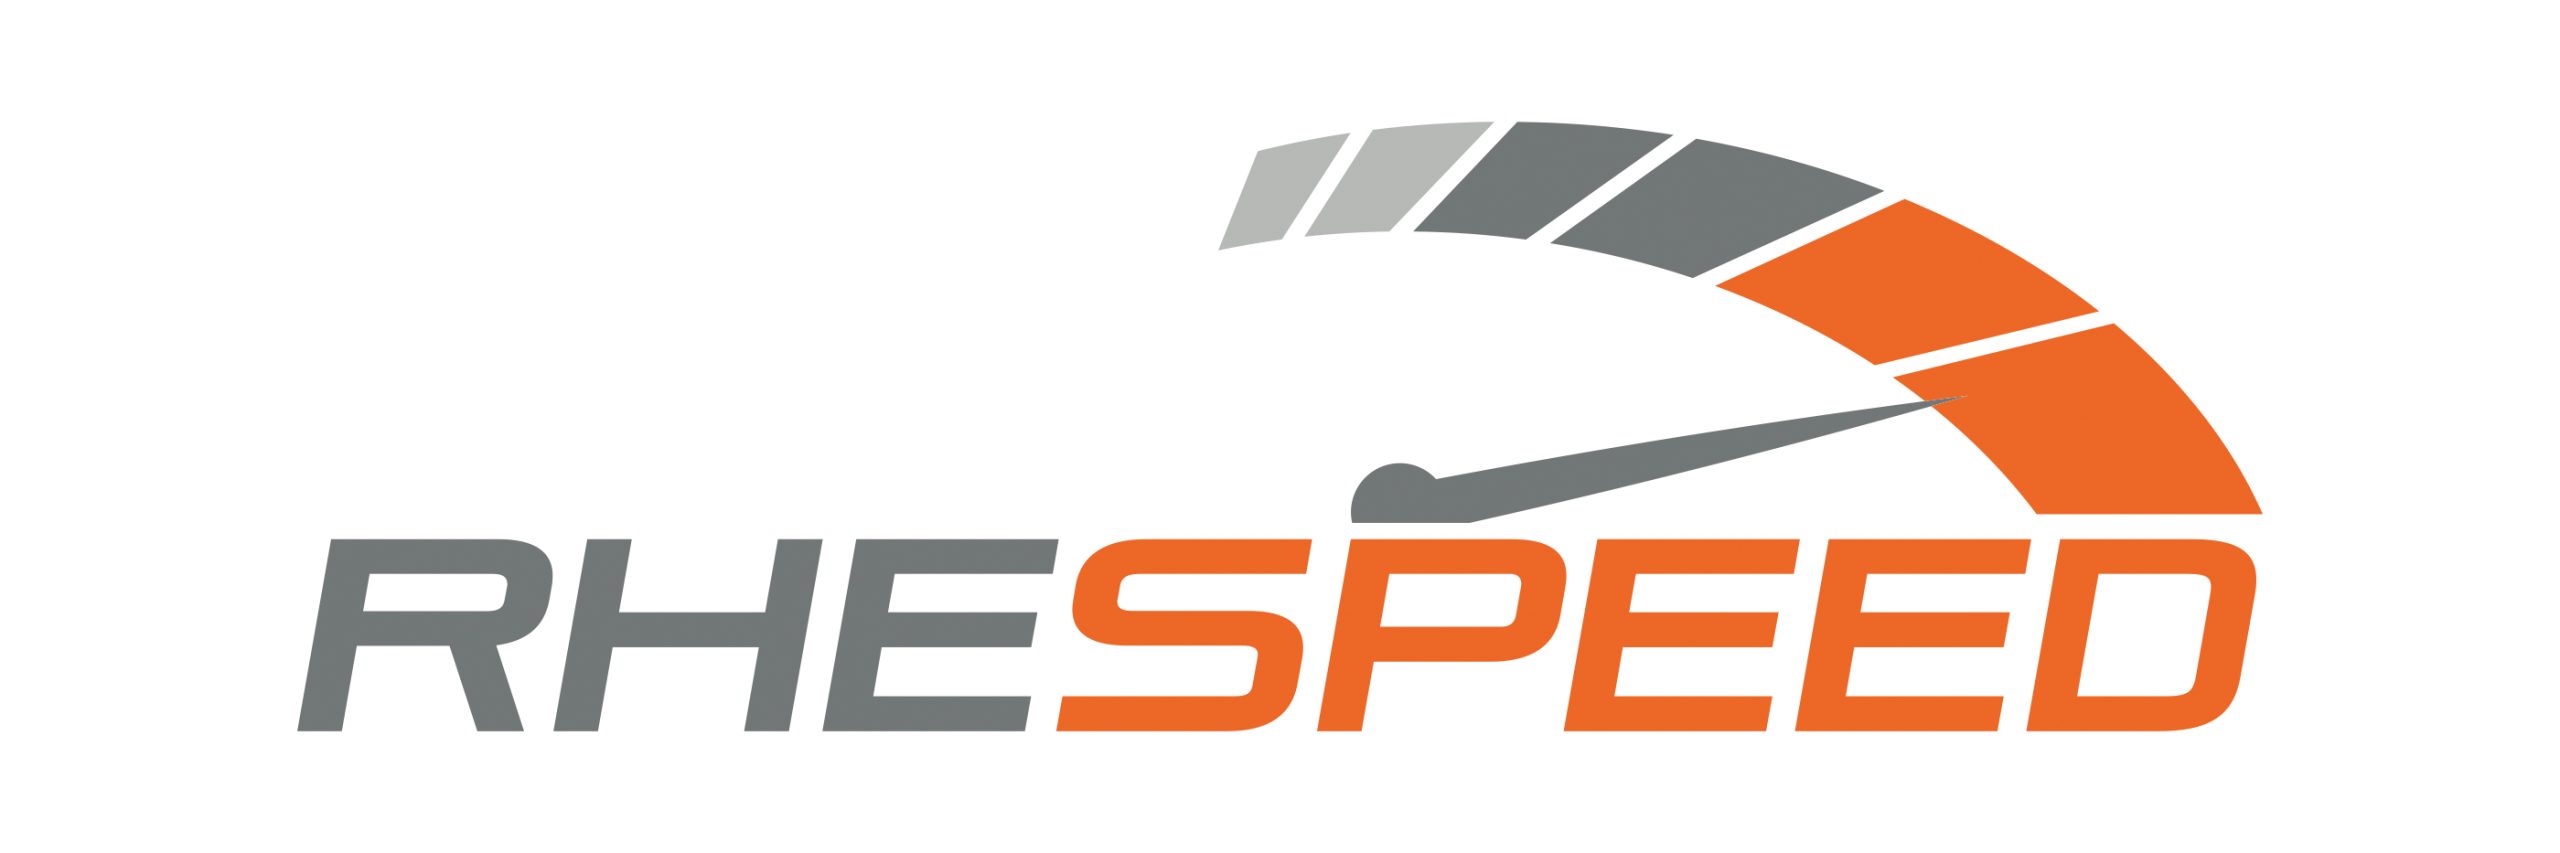 Rhespeed Logo